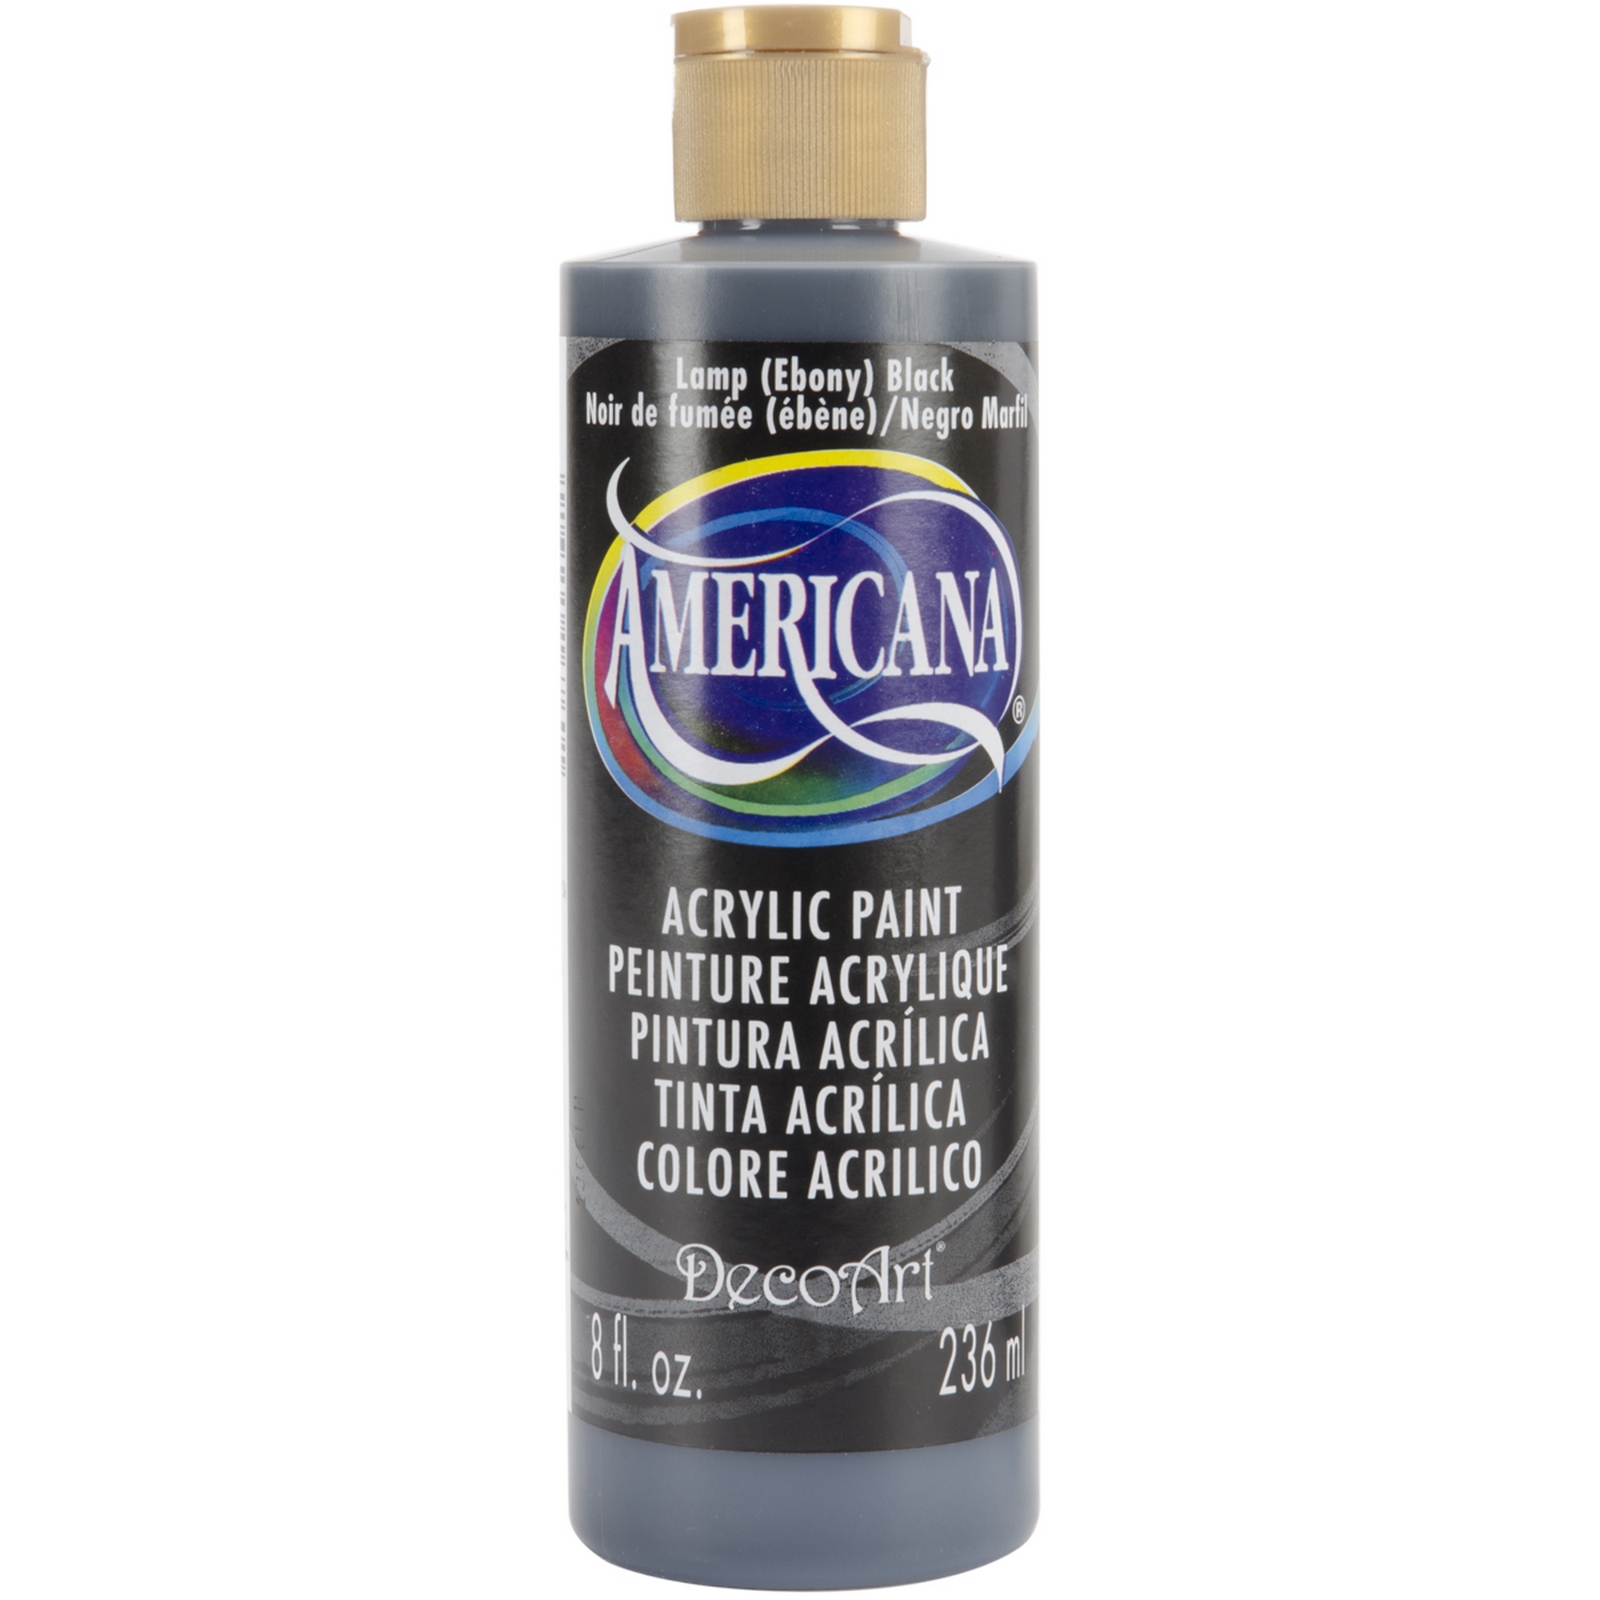 Americana Acrylic Paint 8 Ounces Lamp (ebony) Black